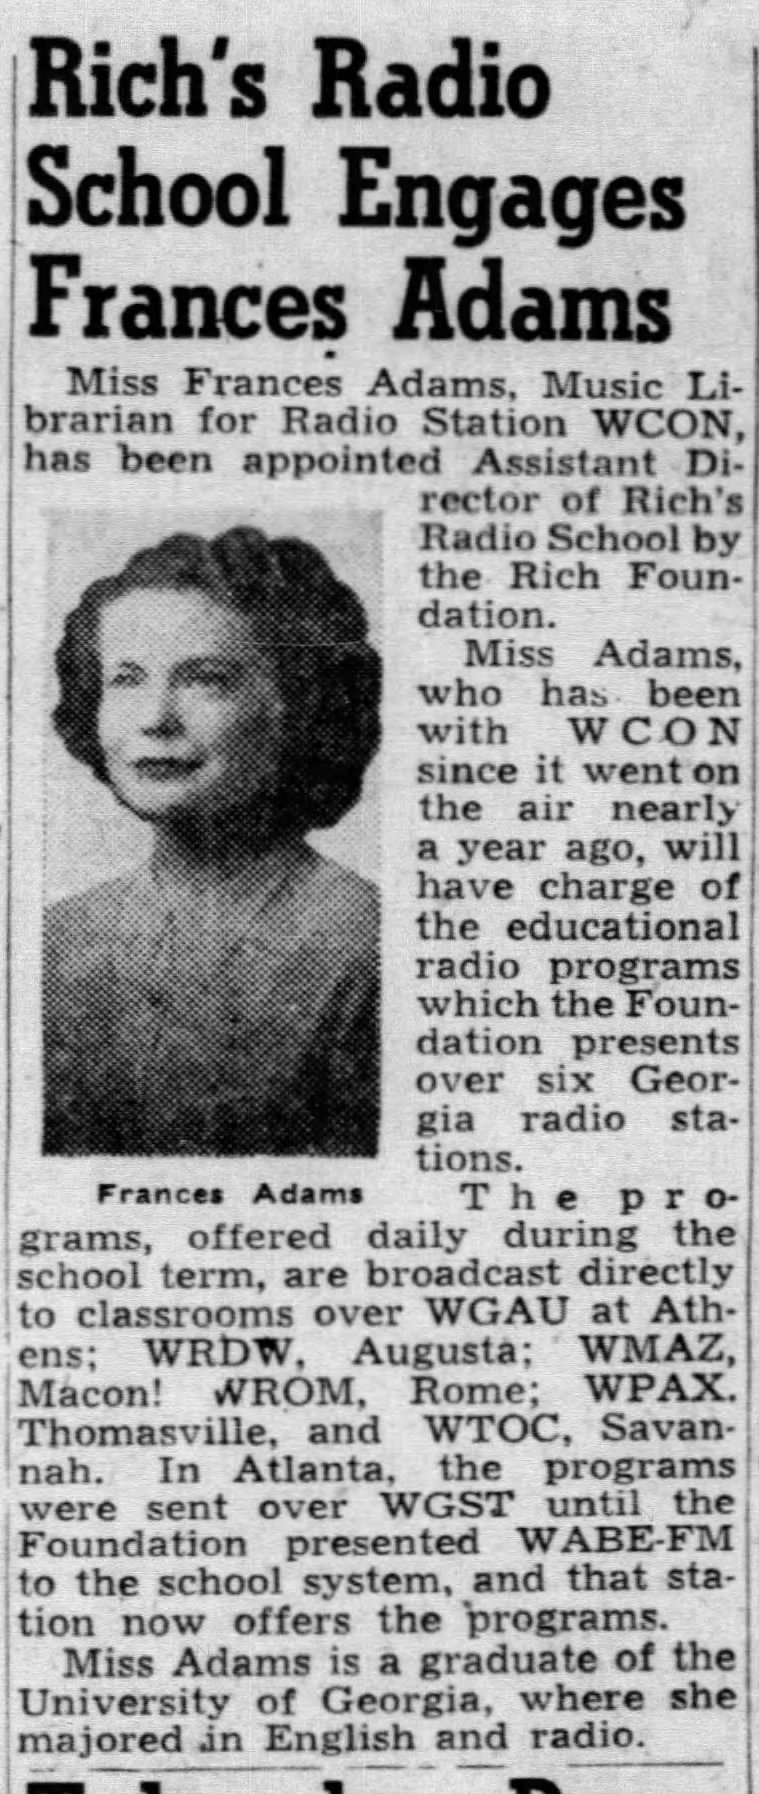 Rich's Radio School Engages Frances Adams